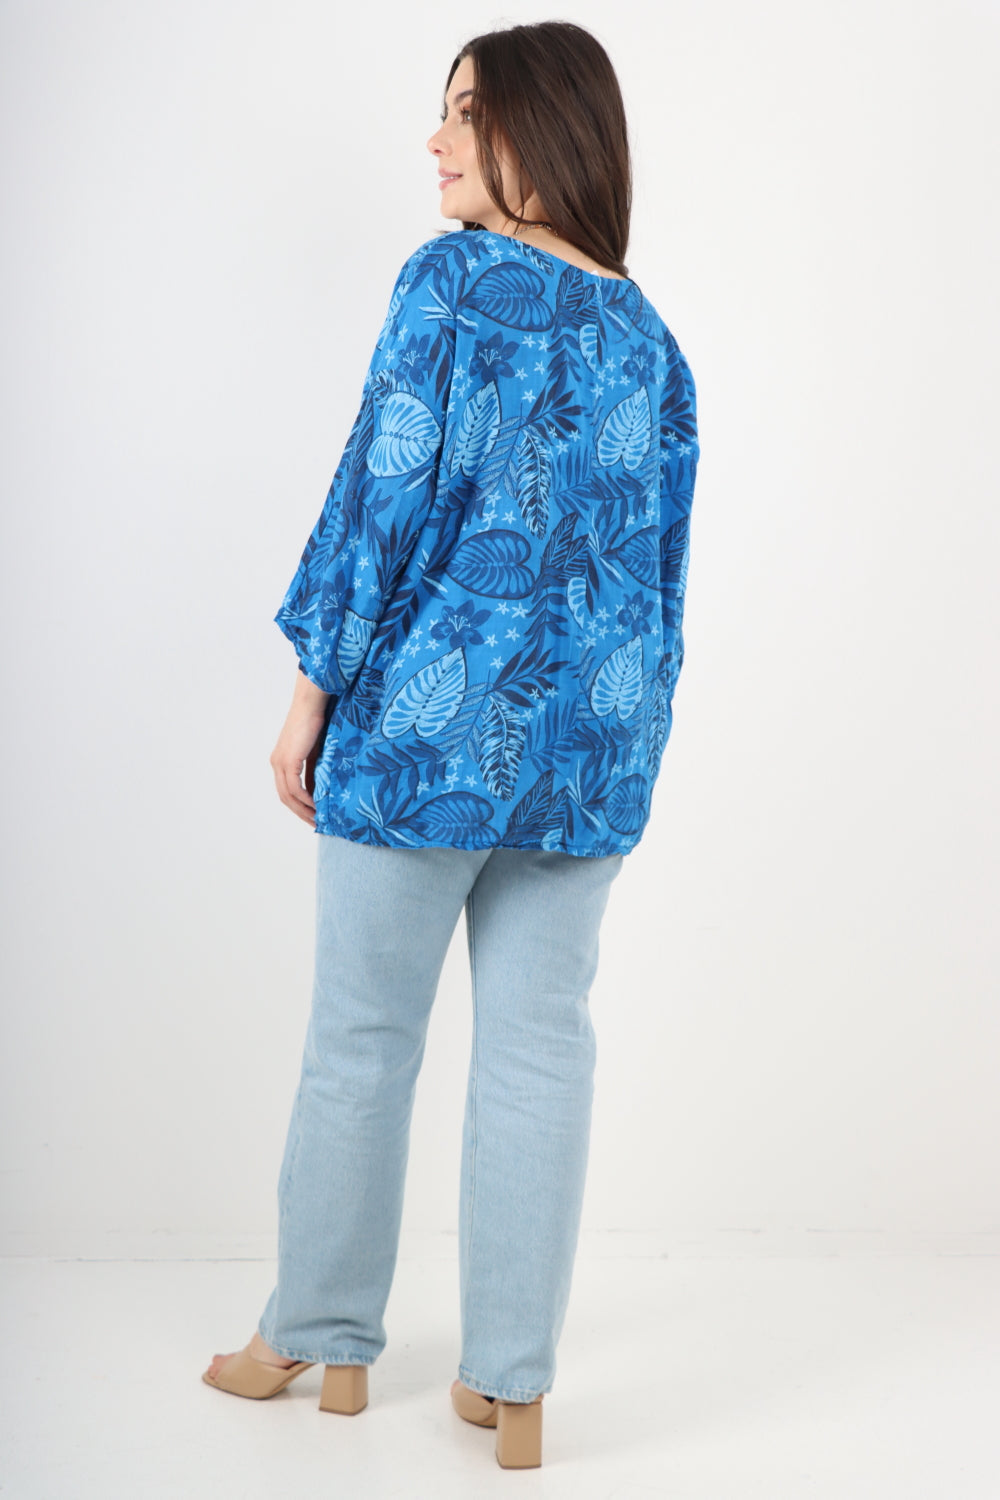 Leaf Print Cotton Tunic top